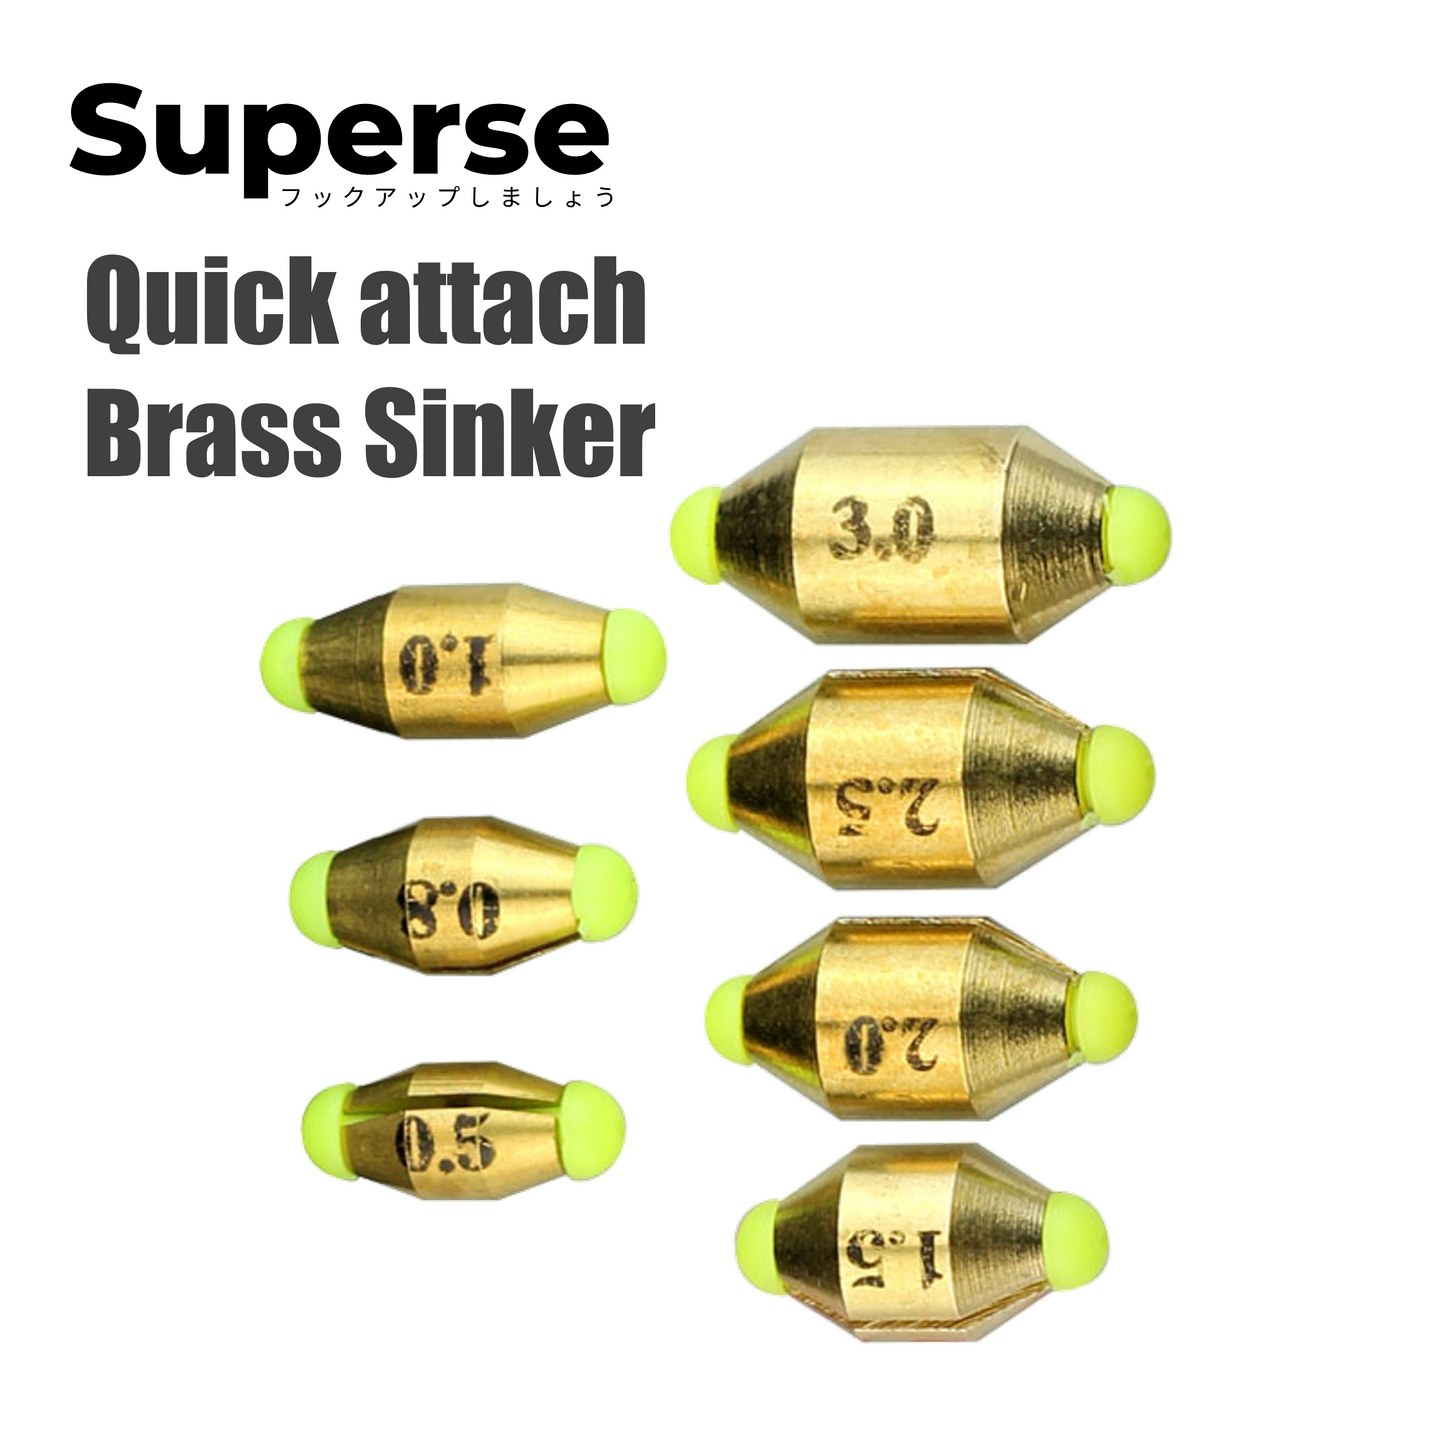 Superse Quick attach Brass Sinker SK06